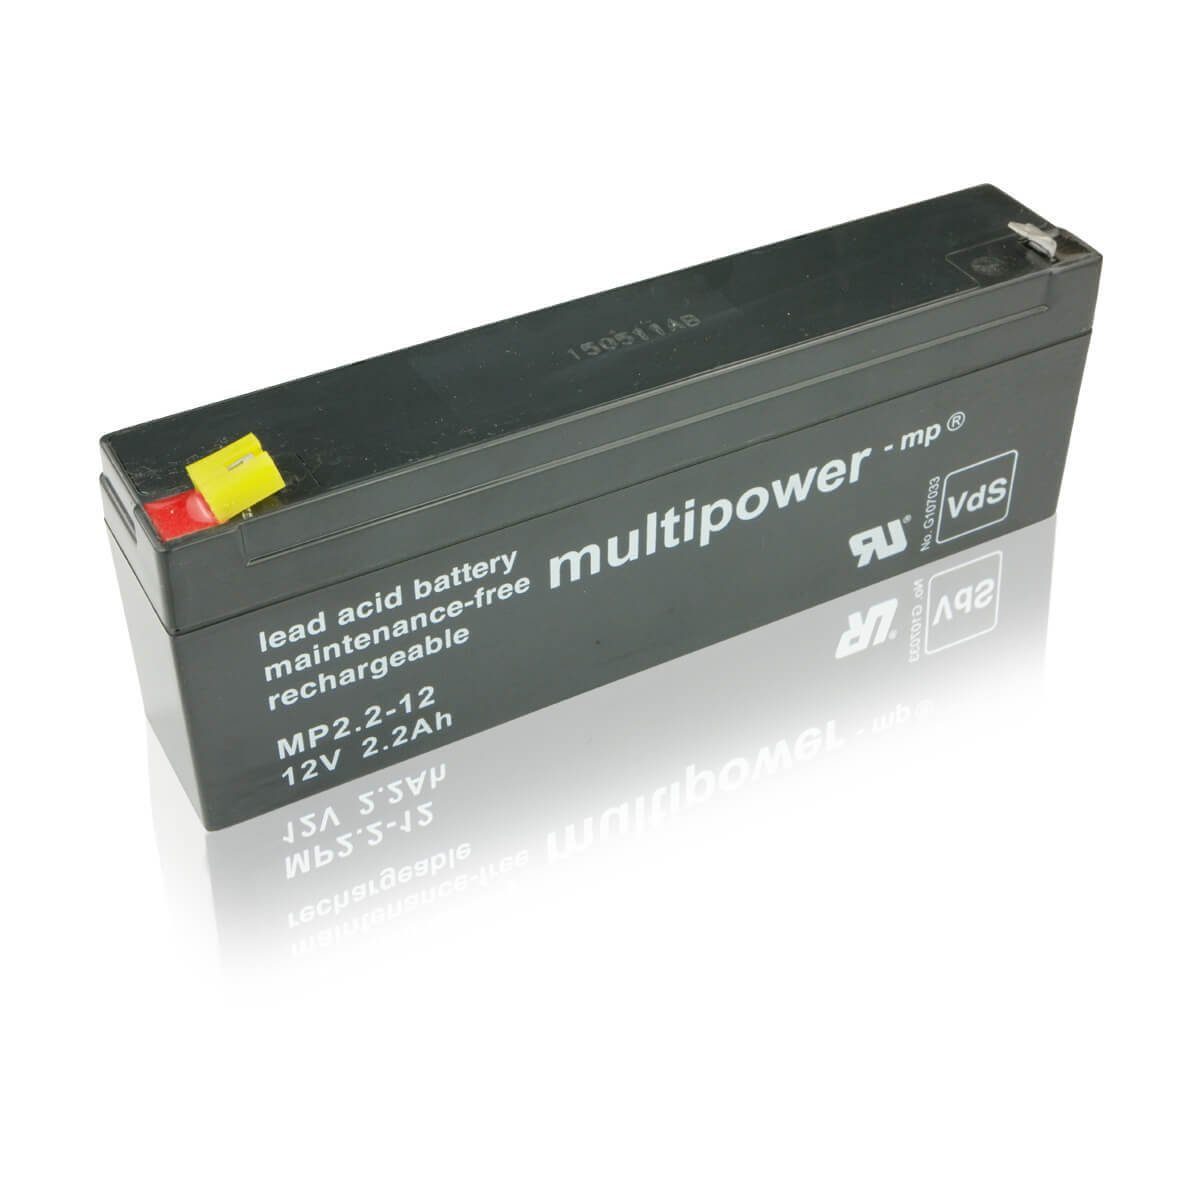 Multipower MP2.3-12 AGM Batterie 12V 2,3Ah Akku mit VdS Zulassung Batterie, (12 V)